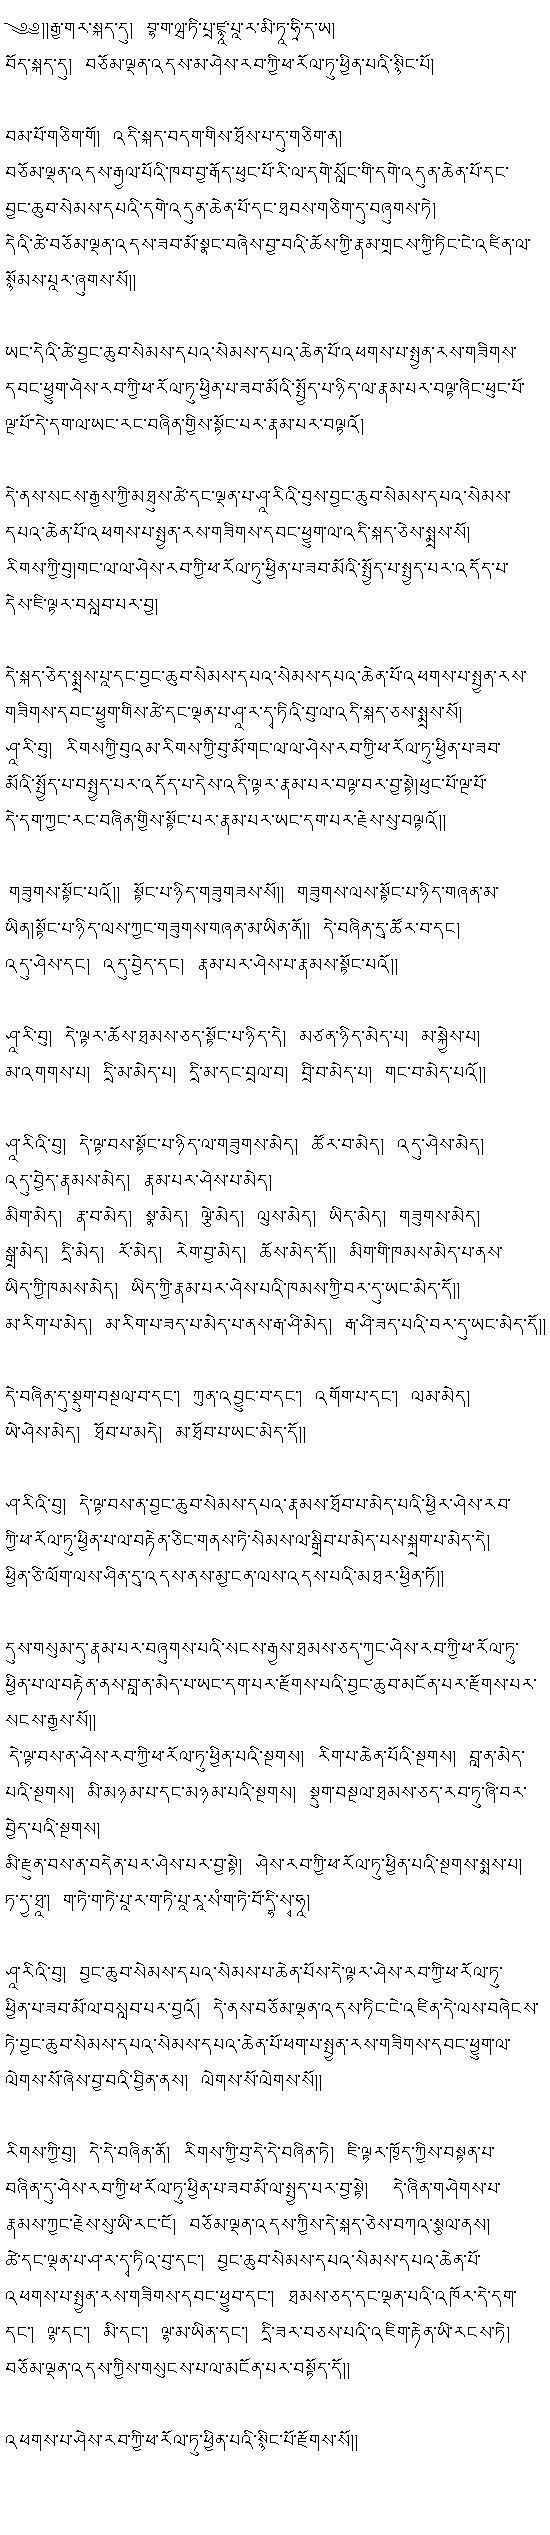 tibeti szöveg